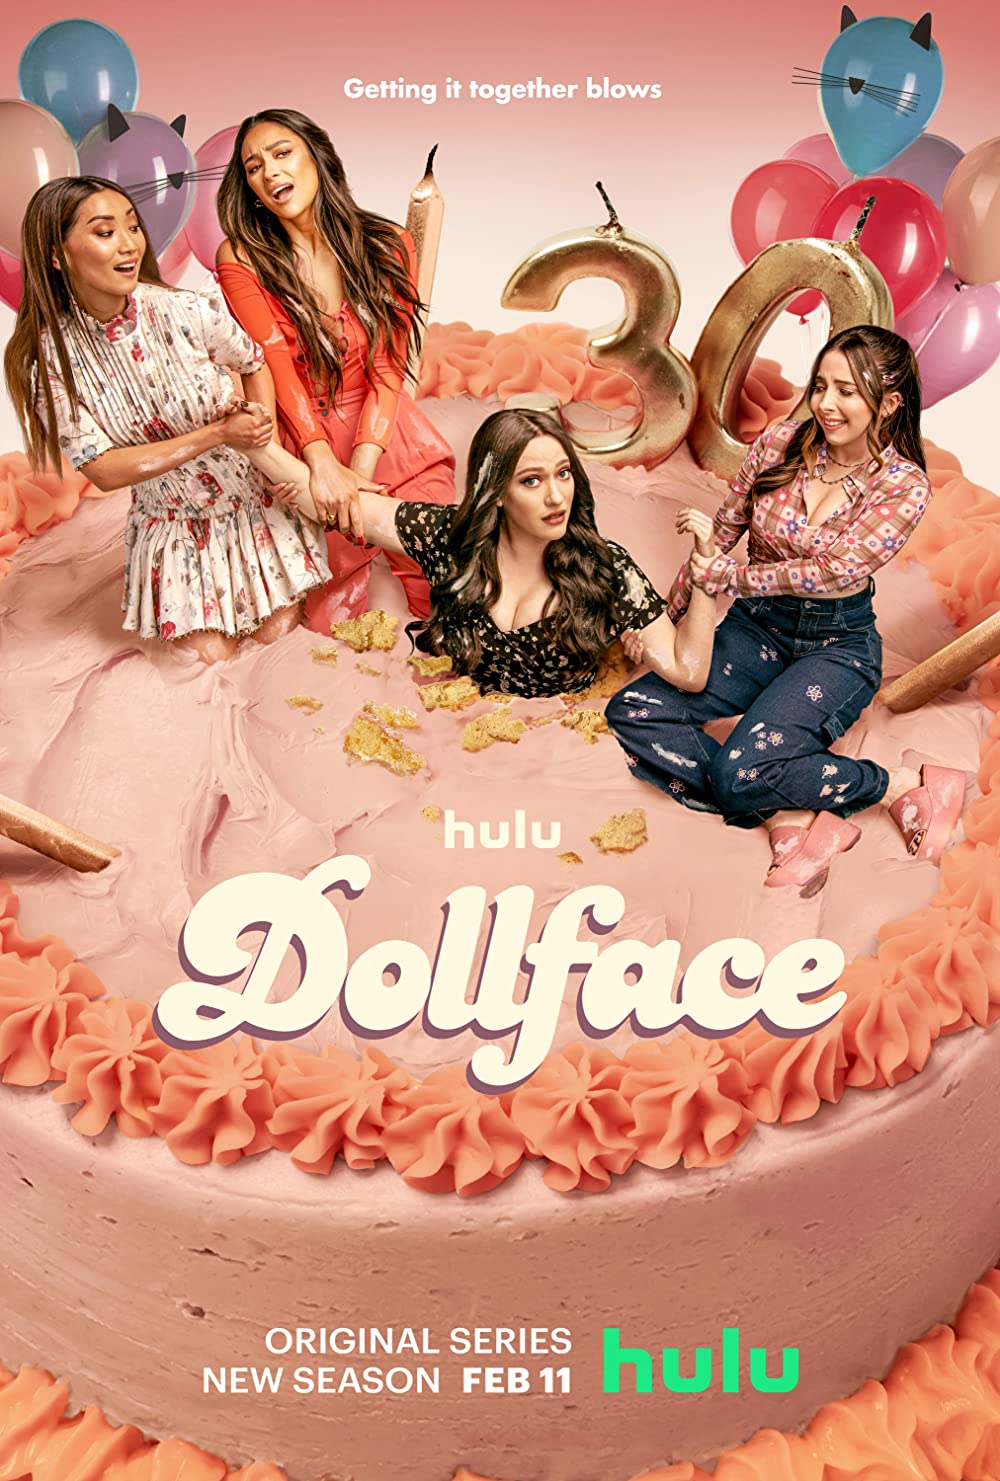 [TV] Dollface Season 1 (Hulu)